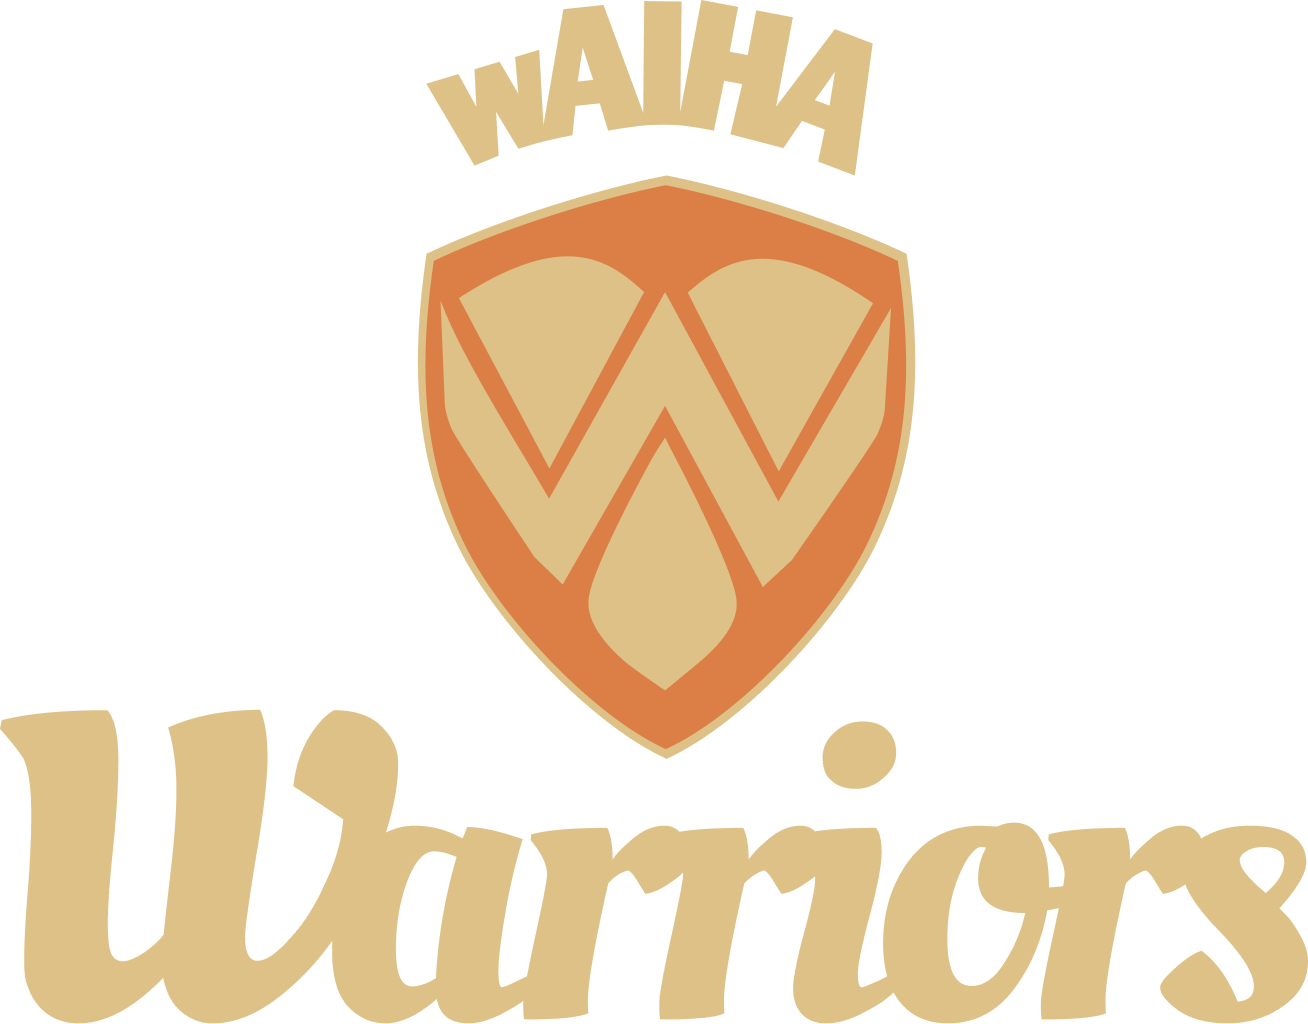 Waiha Warriors